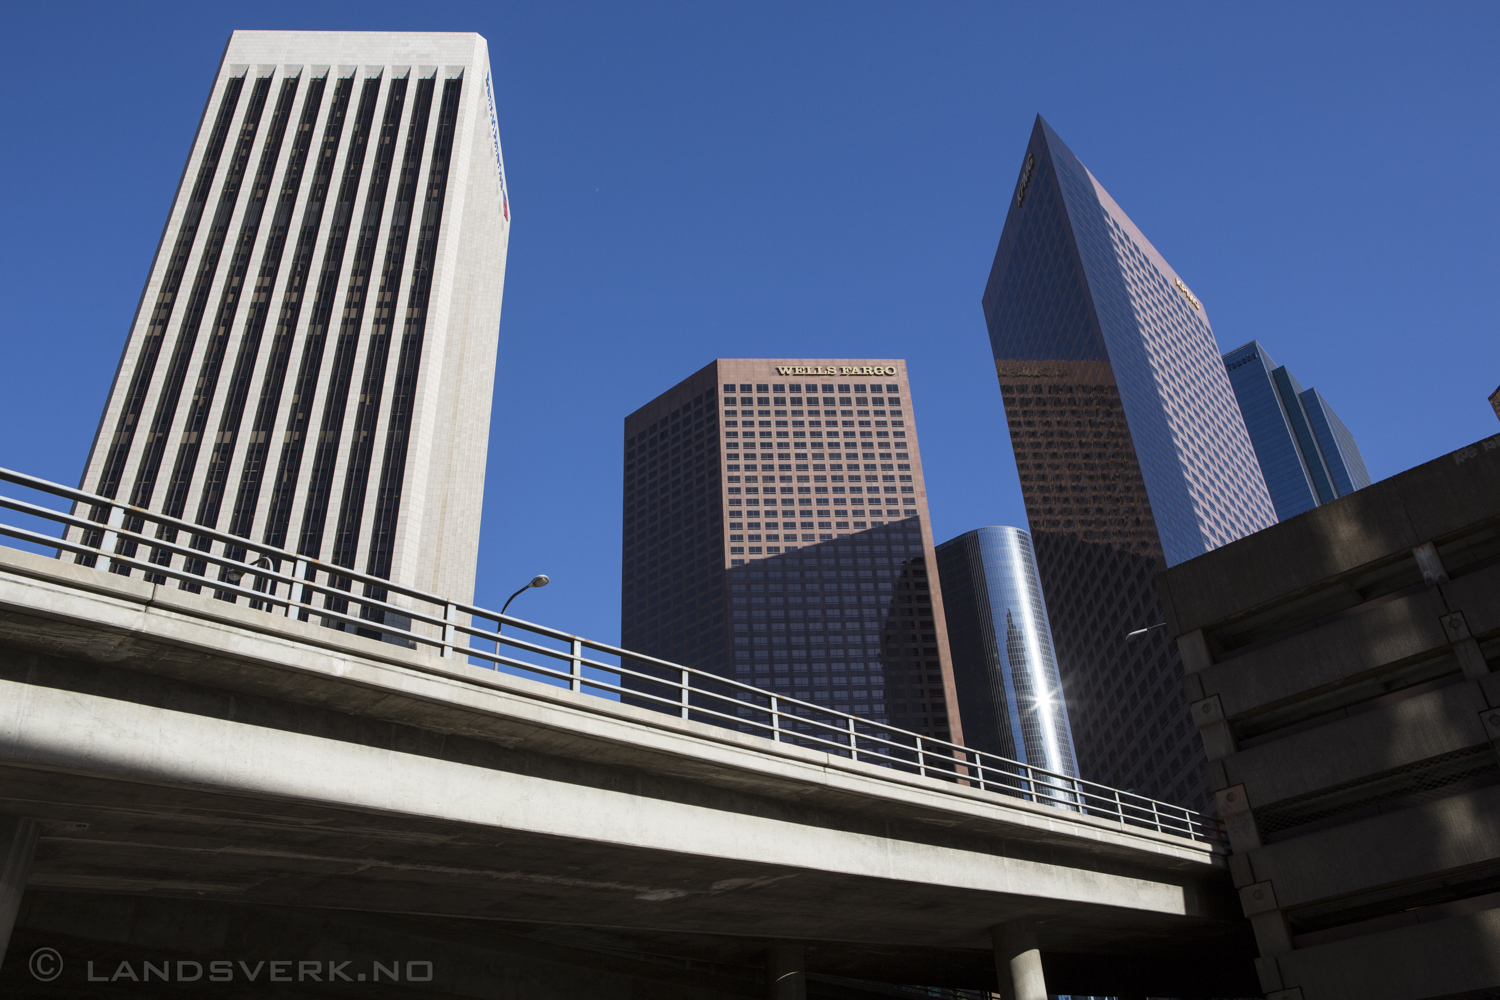 Downtown Los Angeles, California.

(Canon EOS 5D Mark III / Canon EF 24-70mm f/2.8 L USM)